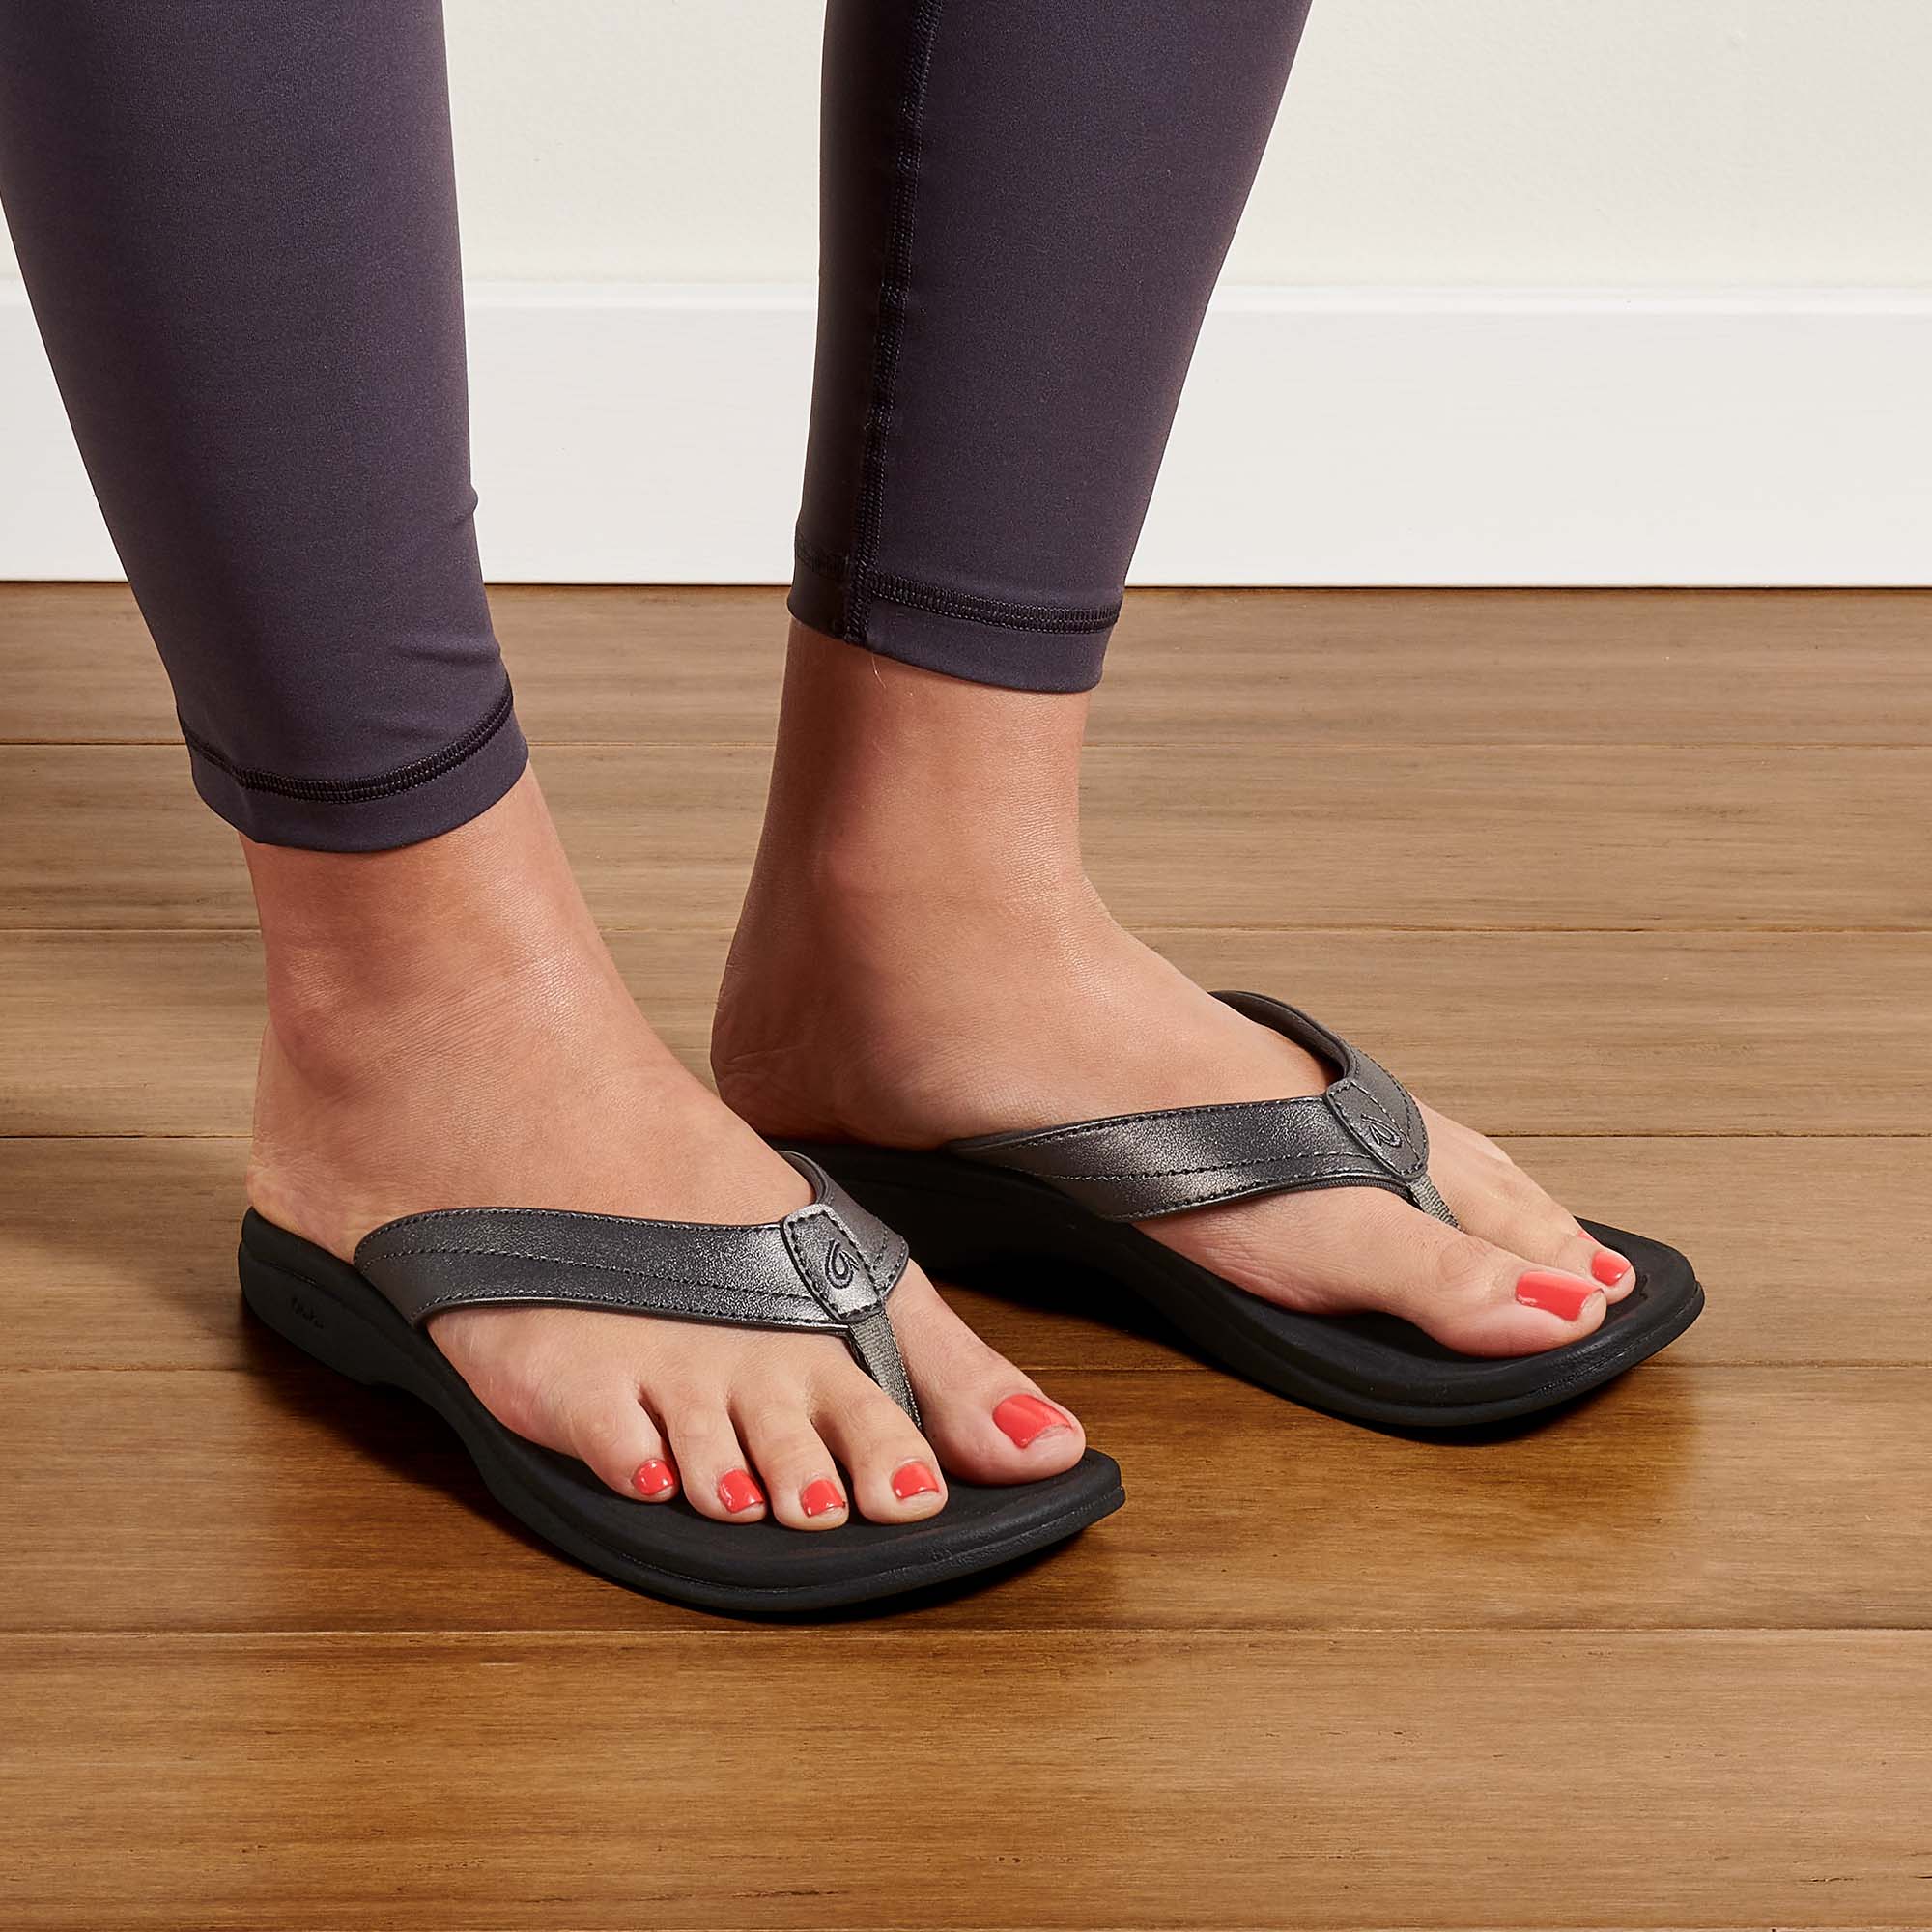 Ohana Women's Best Selling Beach Sandals - Pewter / Black | OluKai